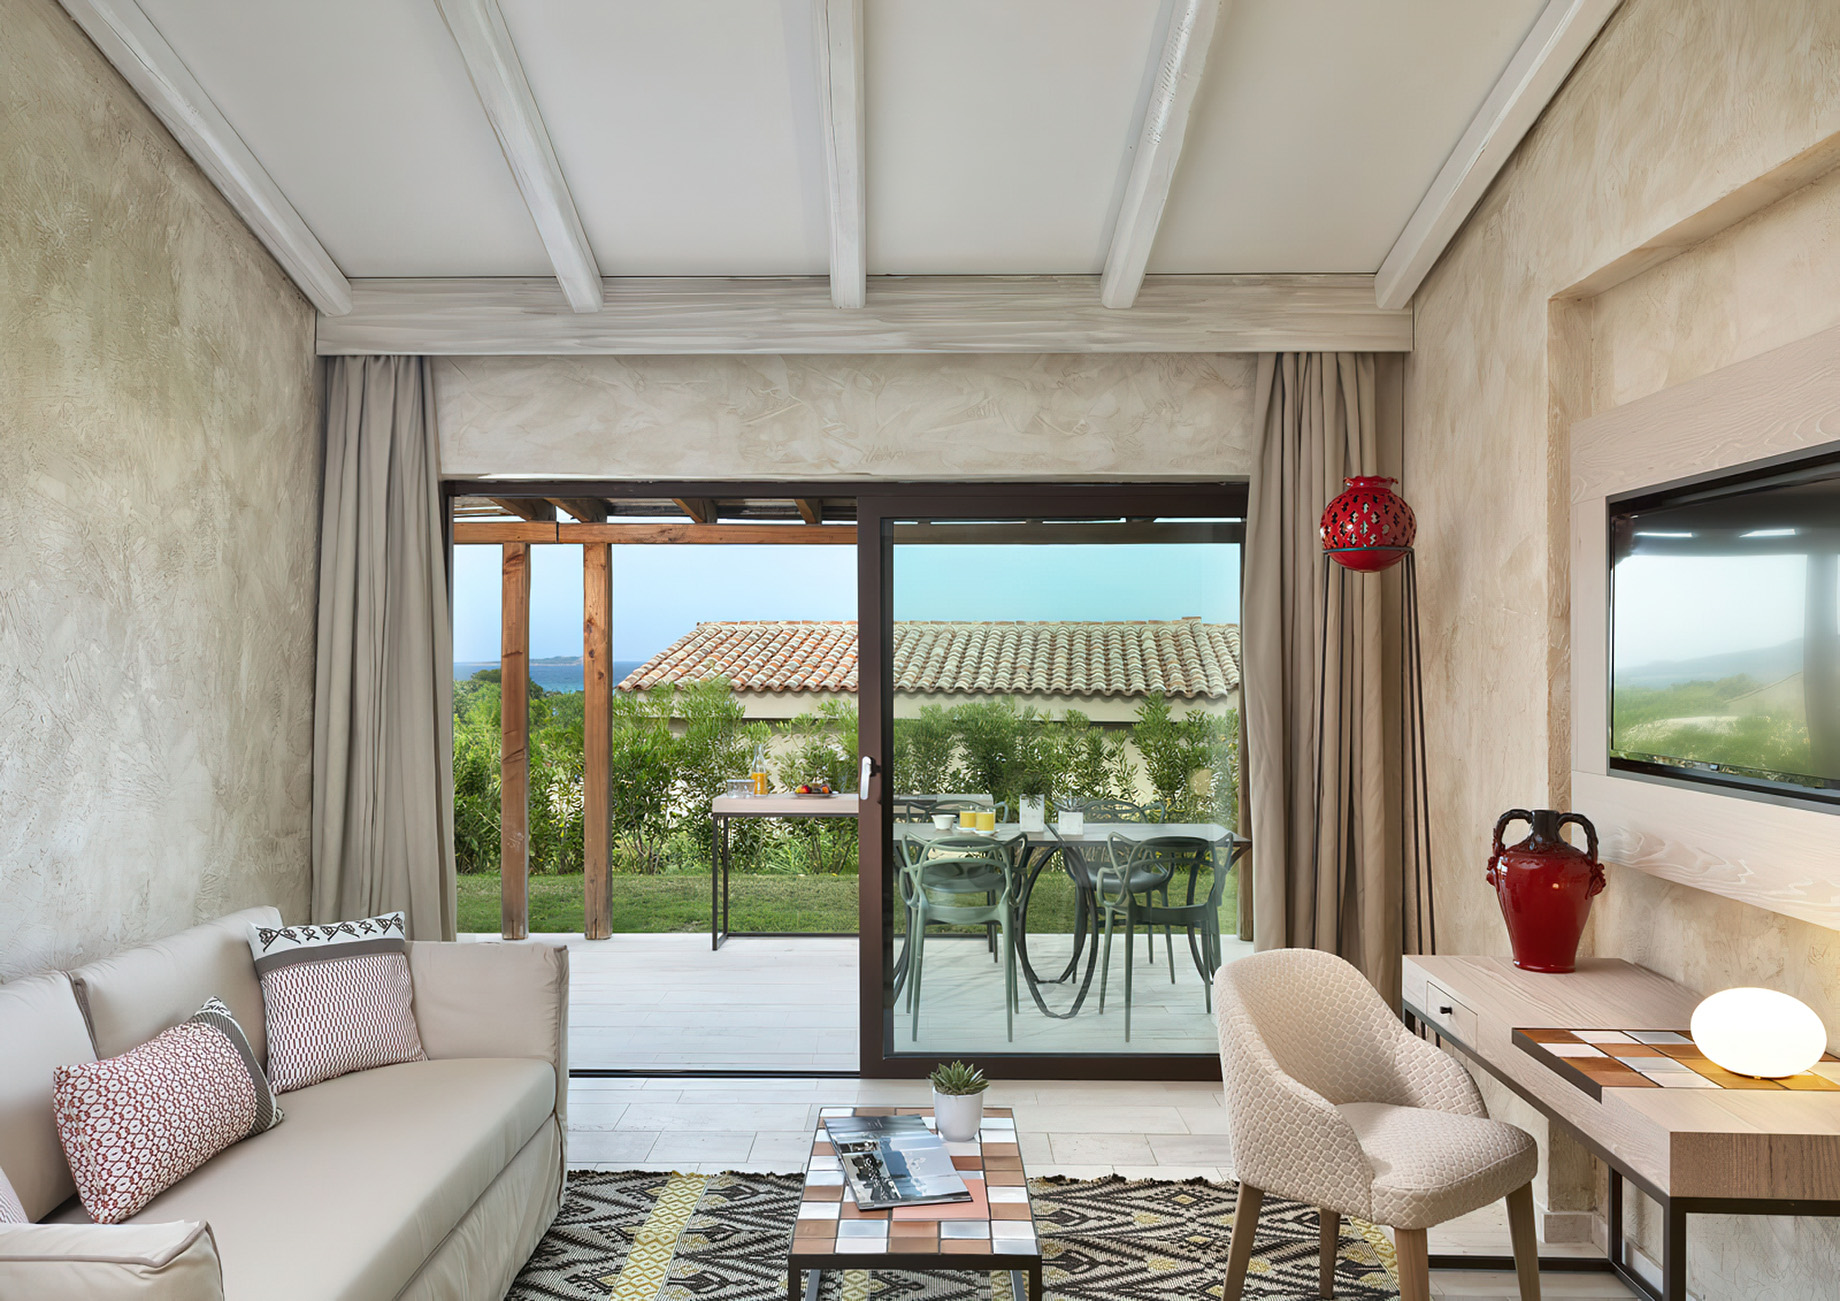 Baglioni Resort Sardinia – San Teodoro, Sardegna, Italy – San Pietro Suite Living Room